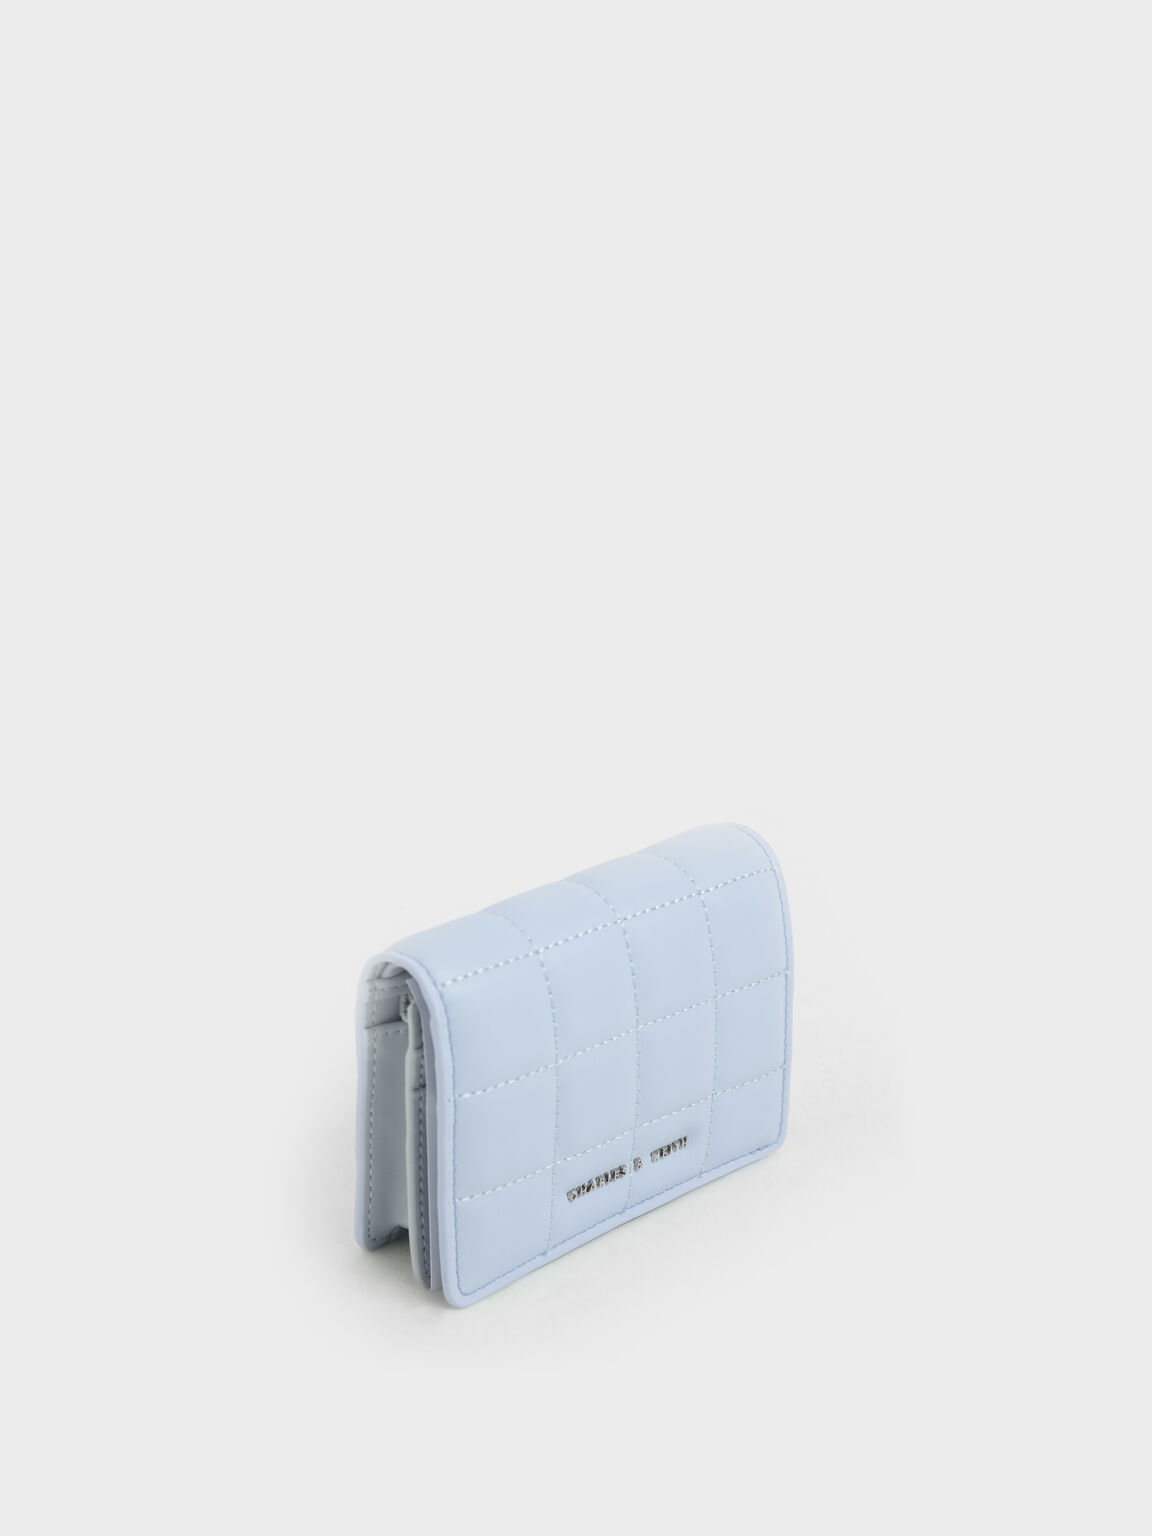 Purse Wallet Little card holder etouting Wool felt kvadrat two-tone greyblue Blue